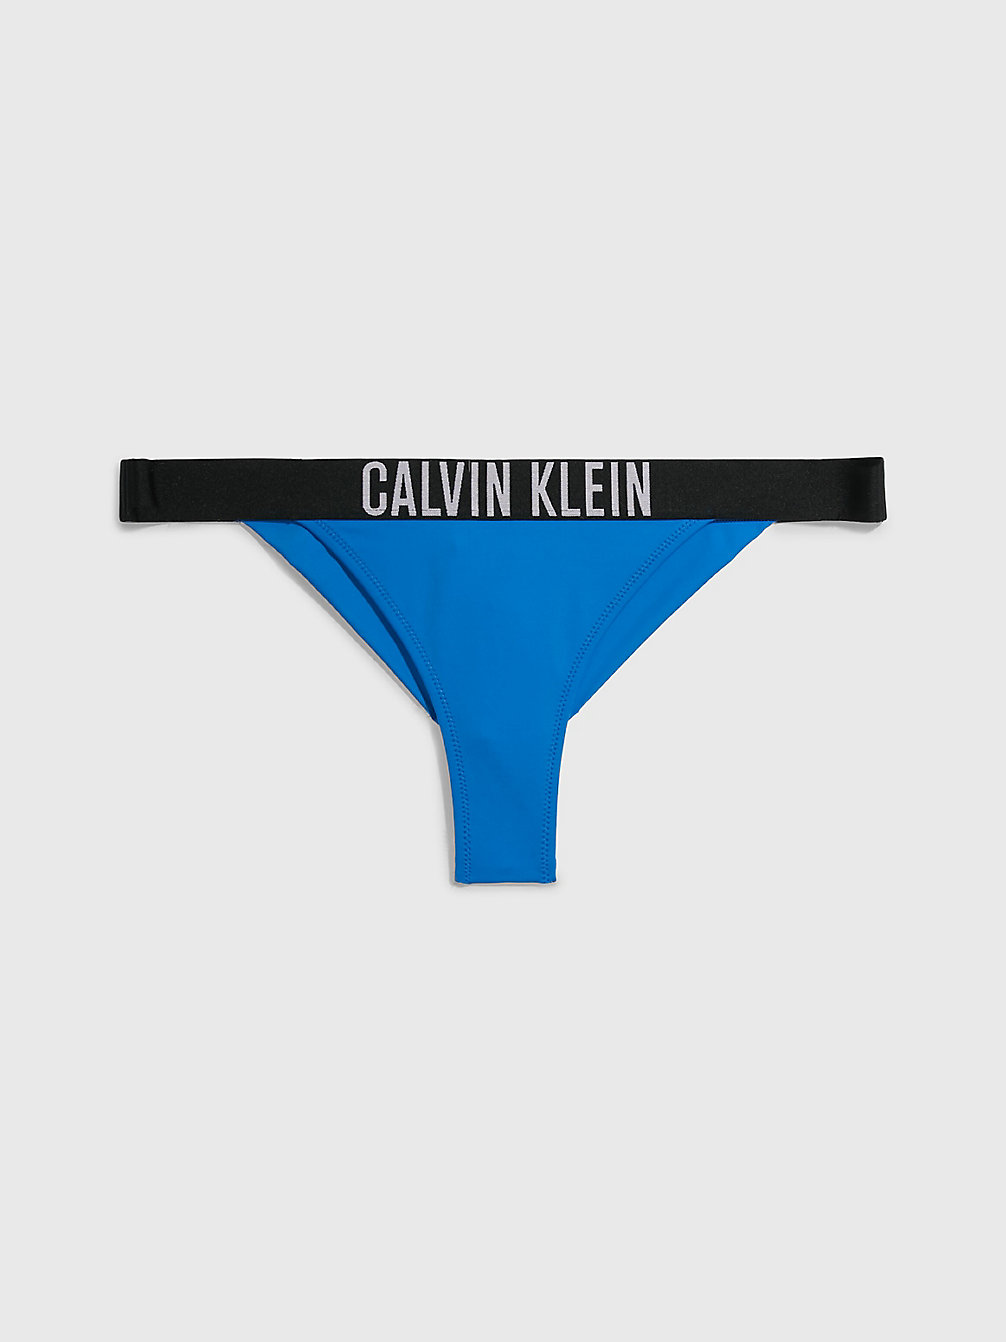 DYNAMIC BLUE > Brazilian Bikinihosen - Intense Power > undefined Damen - Calvin Klein